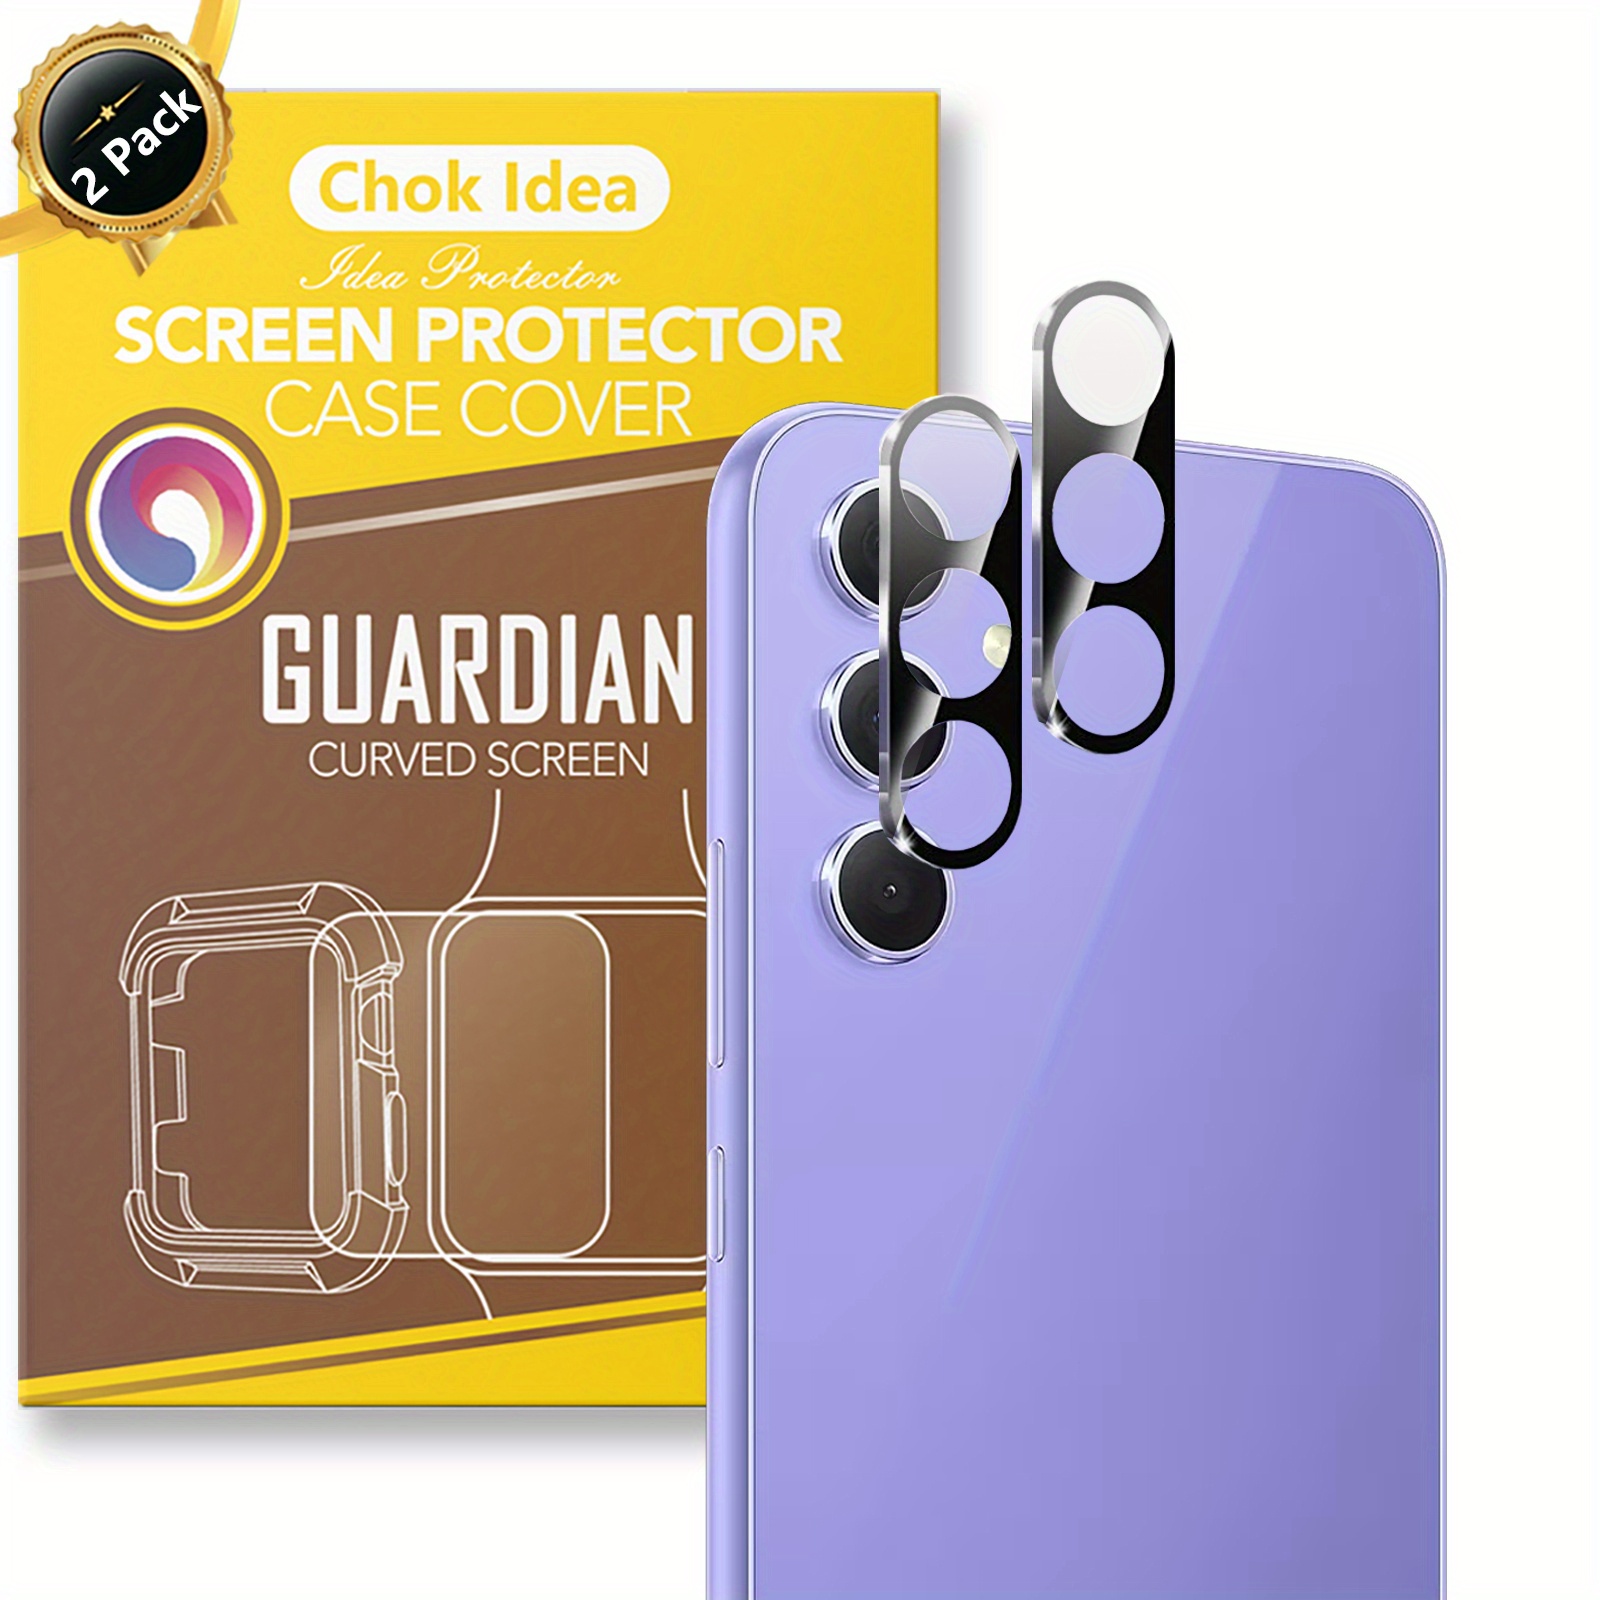 Pack Promo 1 Protector Pantalla iPhone + 1 Protector Cámara